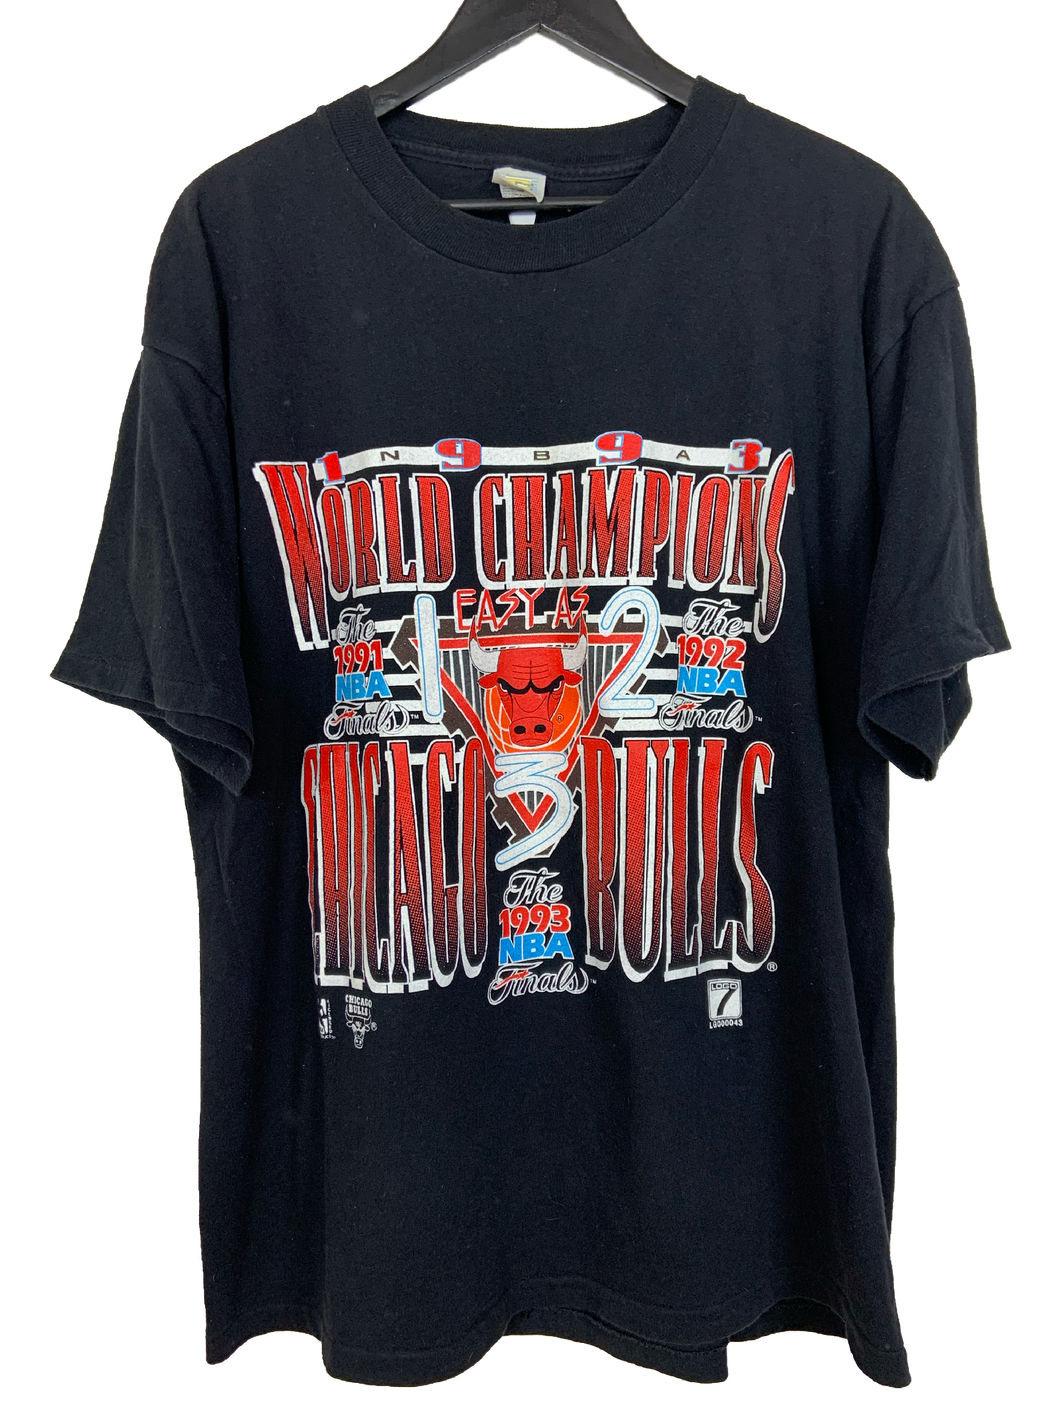 1993 CHICAGO BULLS NBA CHAMPS 'SS' TEE - XL